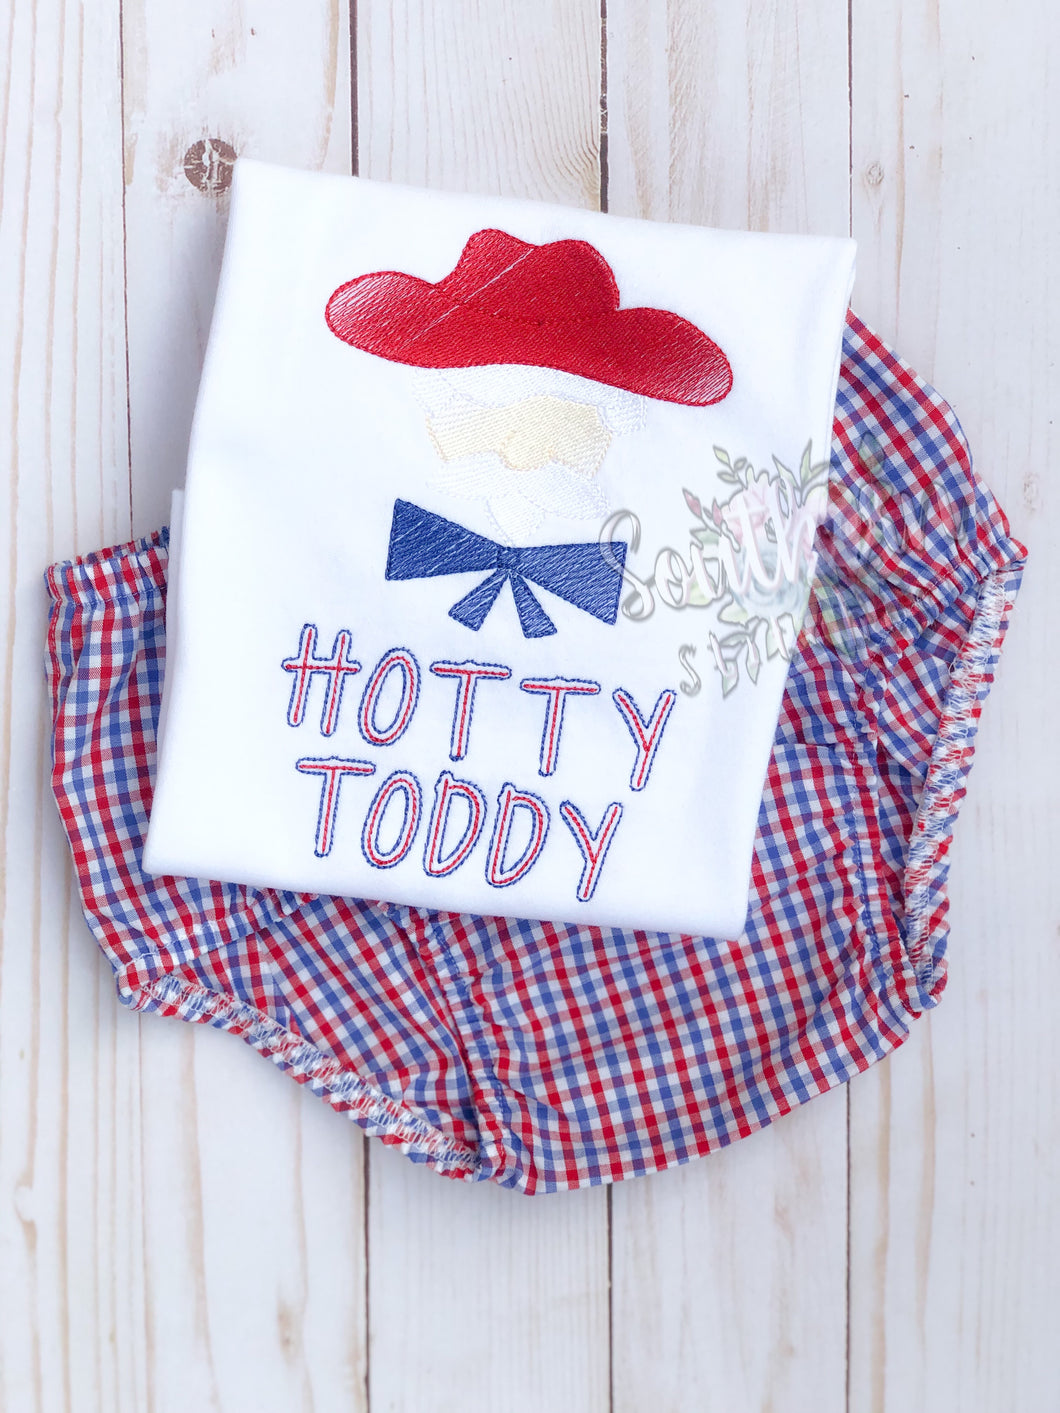 Southern Gentleman Hotty Toddy shirt